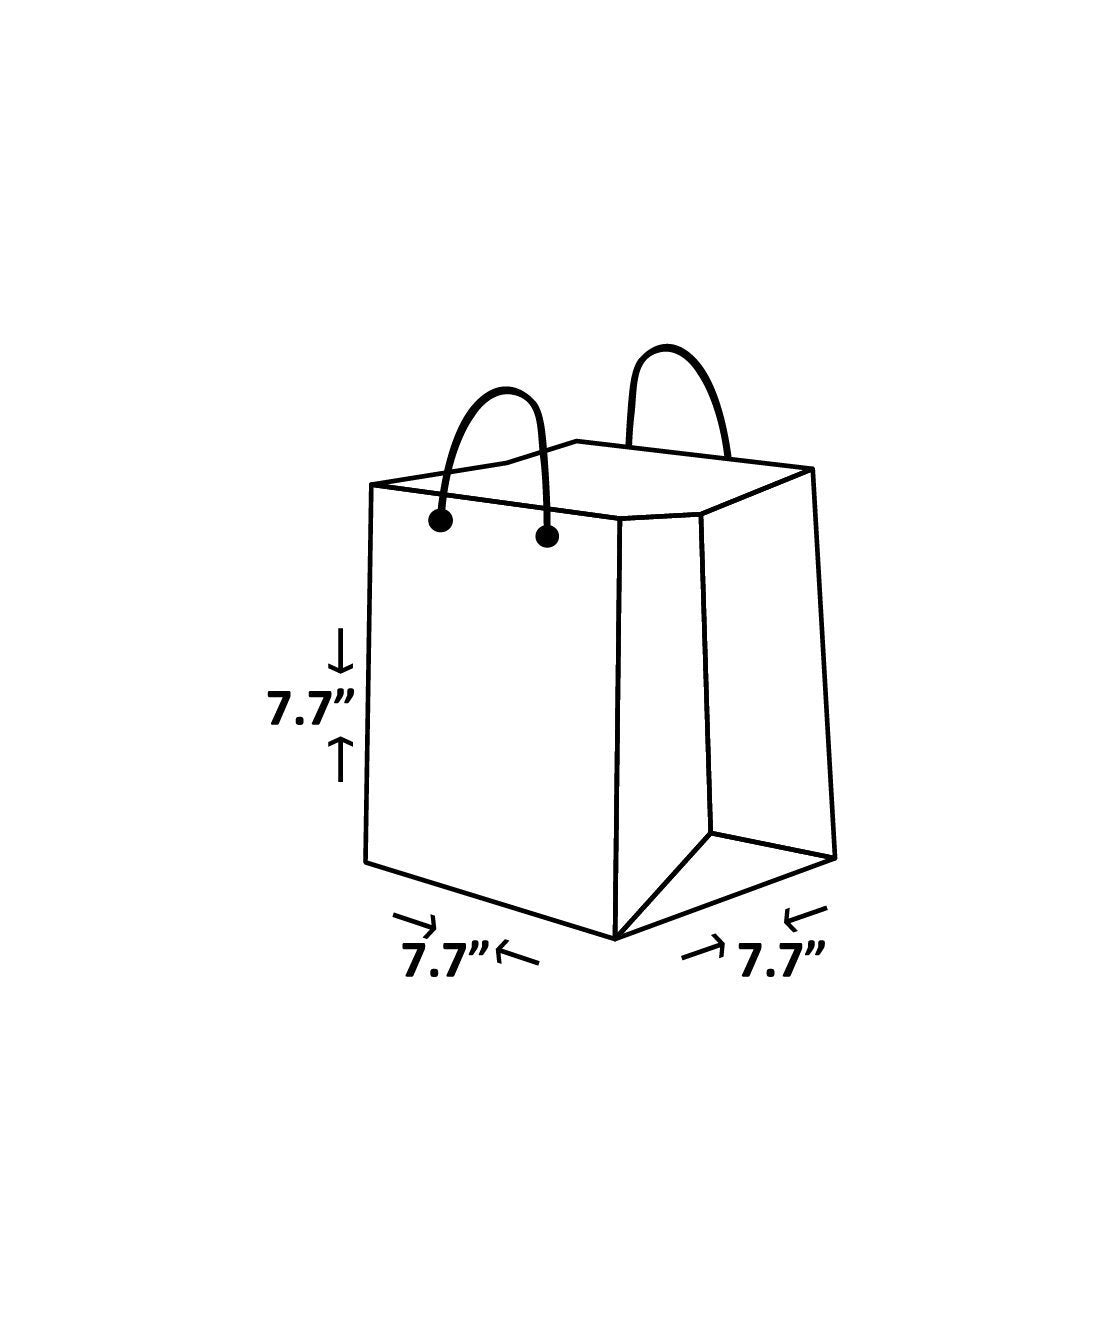 Premium Floral Cream Bag 7.7x7.7 inch - Golden design Patter - Square Bag For Gift Box Packaging